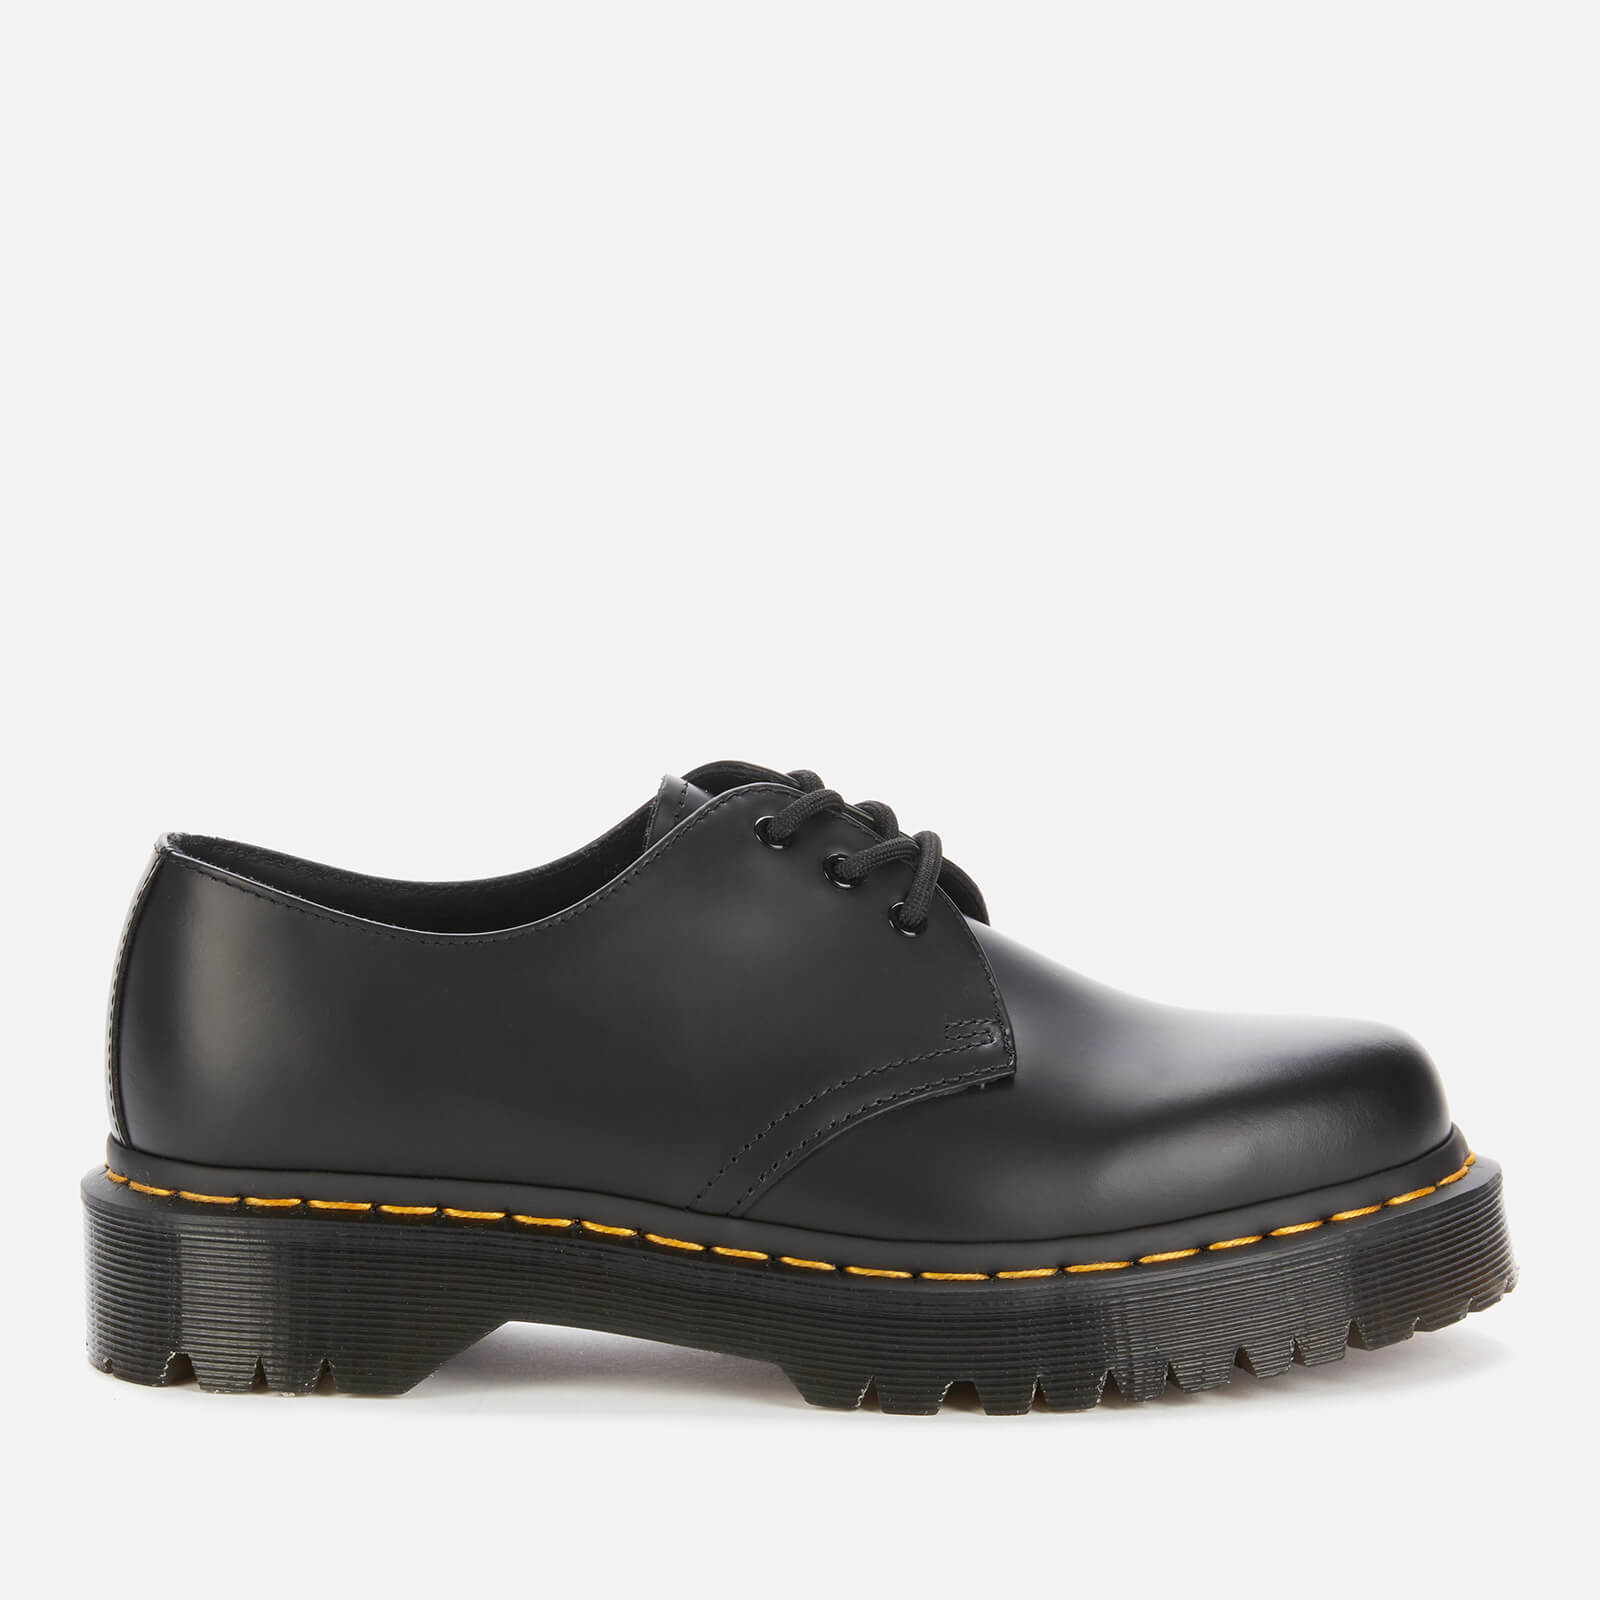 Dr. Martens 1461 Bex Smooth Leather 3-Eye Shoes - Black - Uk 7